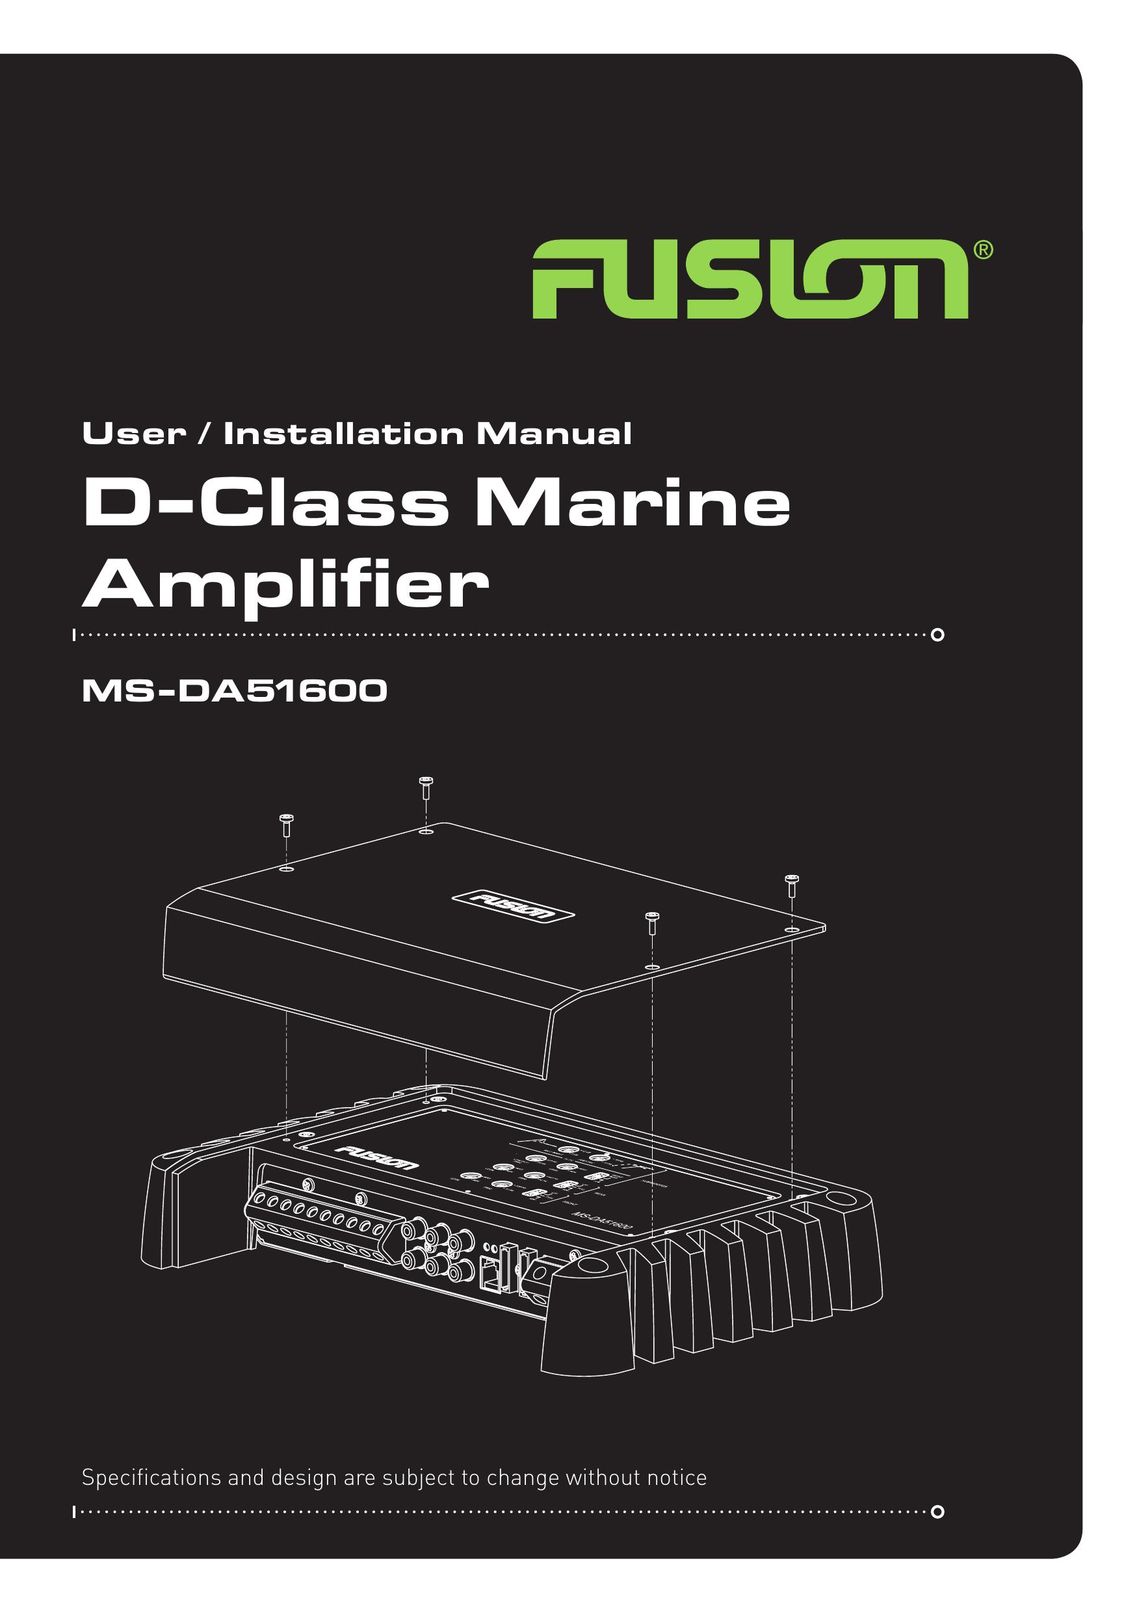 Fusion MS-DA51600 Car Amplifier User Manual